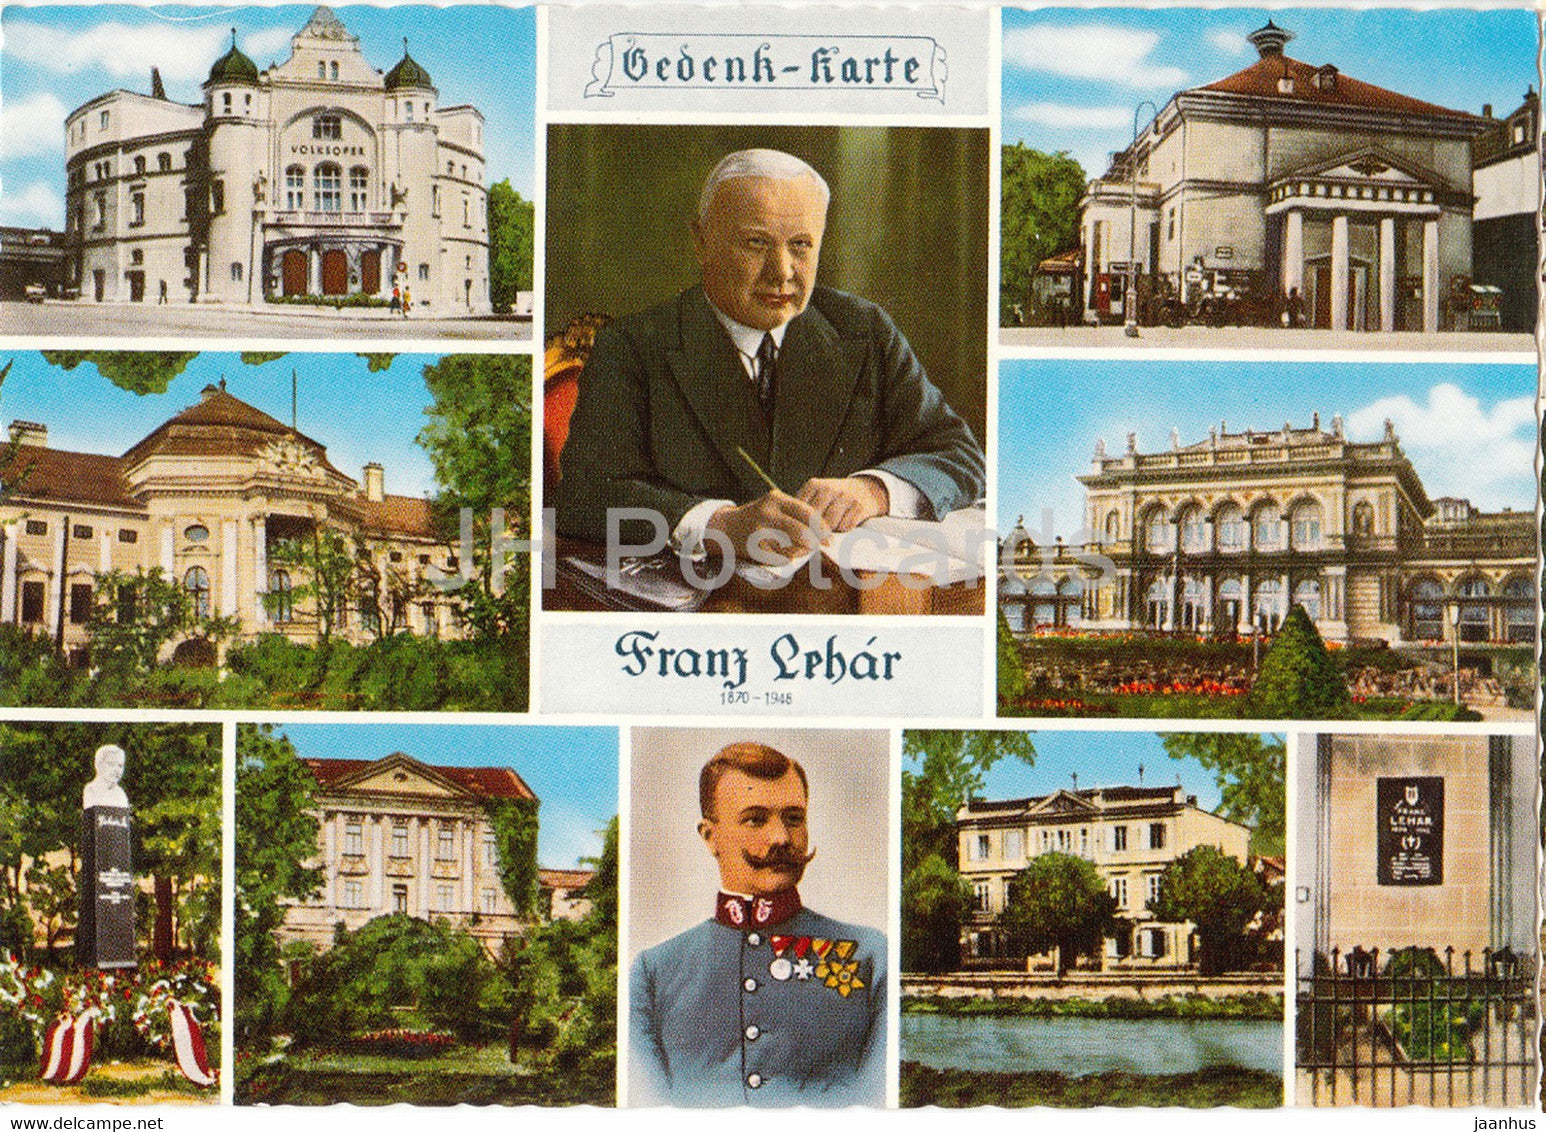 Franz Lehar - Volksoper Wien - Lehar Theater - Bad Ischl - Konzert Cafe - composer - multiview - Austria - unused - JH Postcards